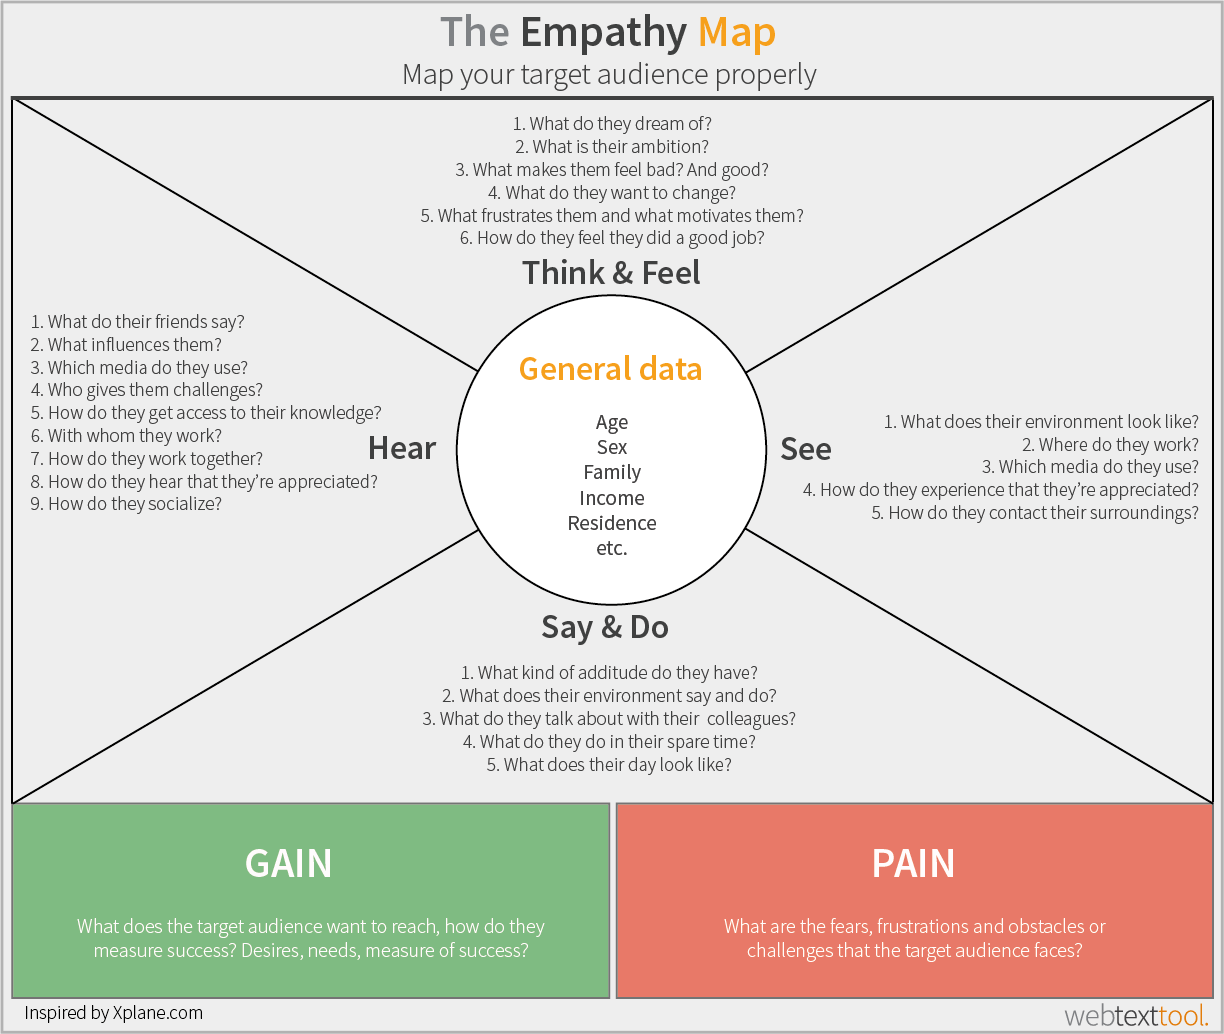 The Empathy Map